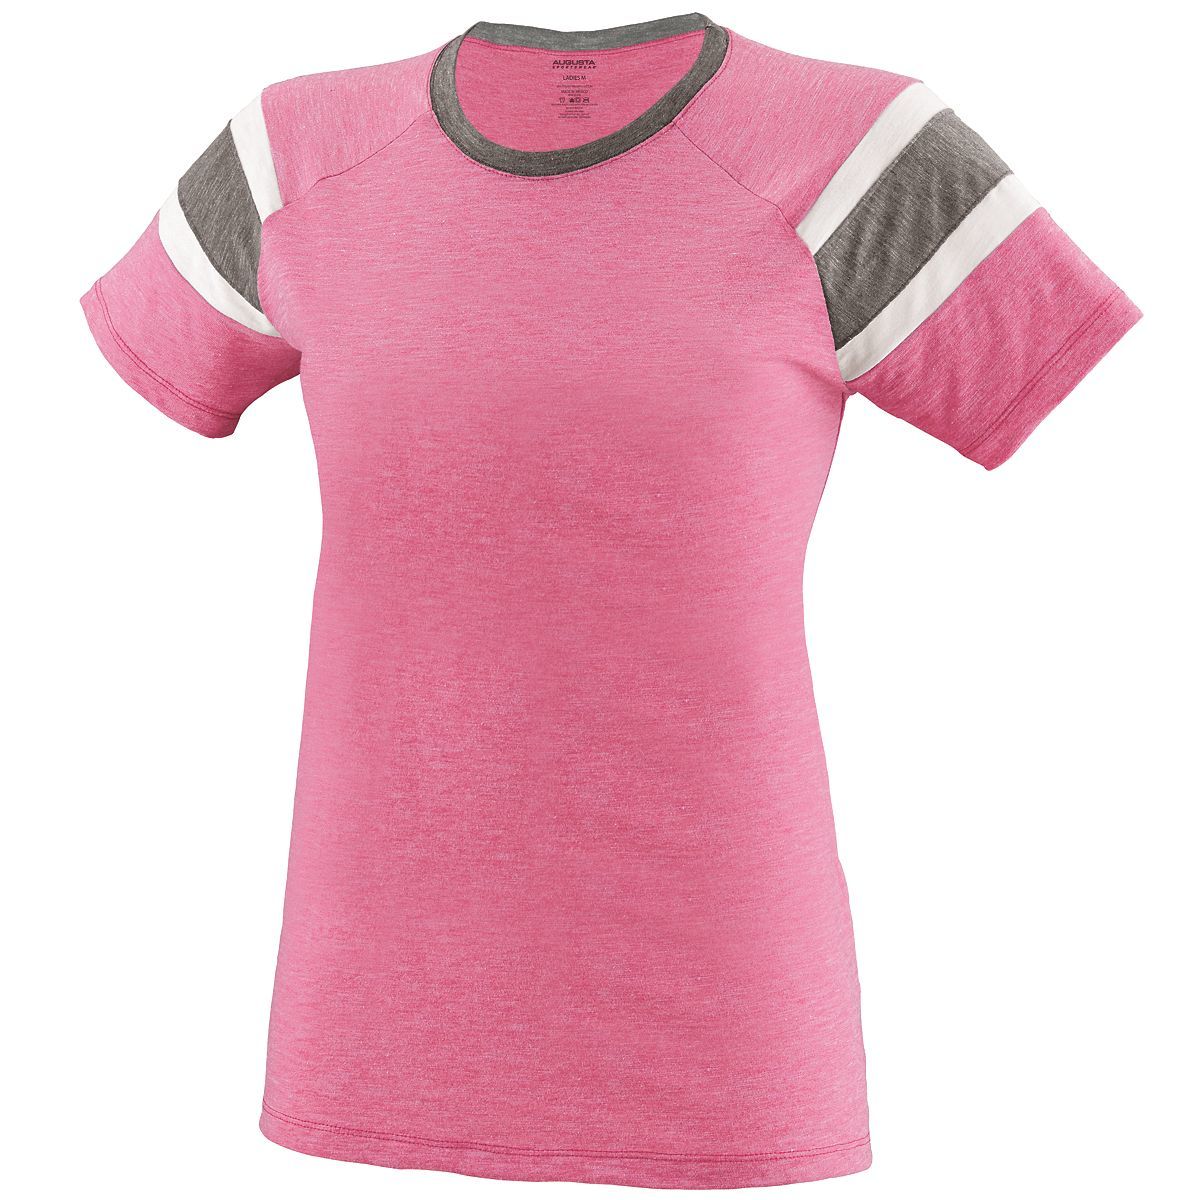 Augusta Sportswear Ladies Fanatic Tee in Power Pink/Slate/White  -Part of the Ladies, Ladies-Tee-Shirt, T-Shirts, Augusta-Products, Shirts product lines at KanaleyCreations.com